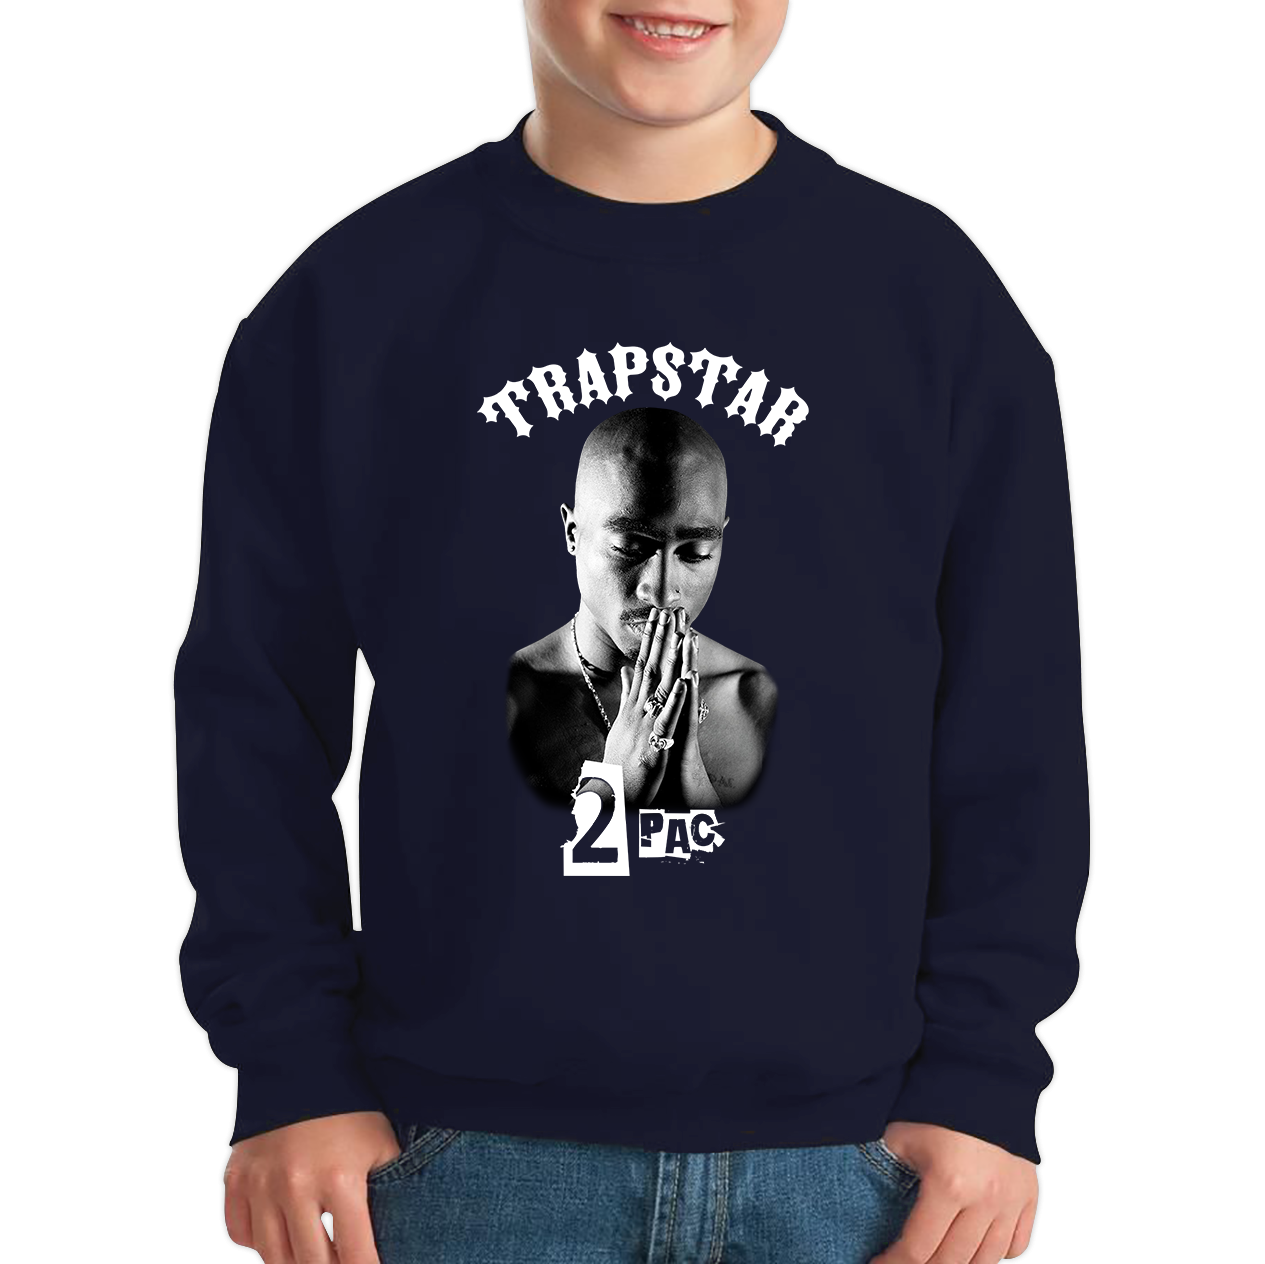 Trapstar 2pac Jumper Tupac Shakur American Rapper Hip Hop Lovers Music Gift Kids Sweatshirt